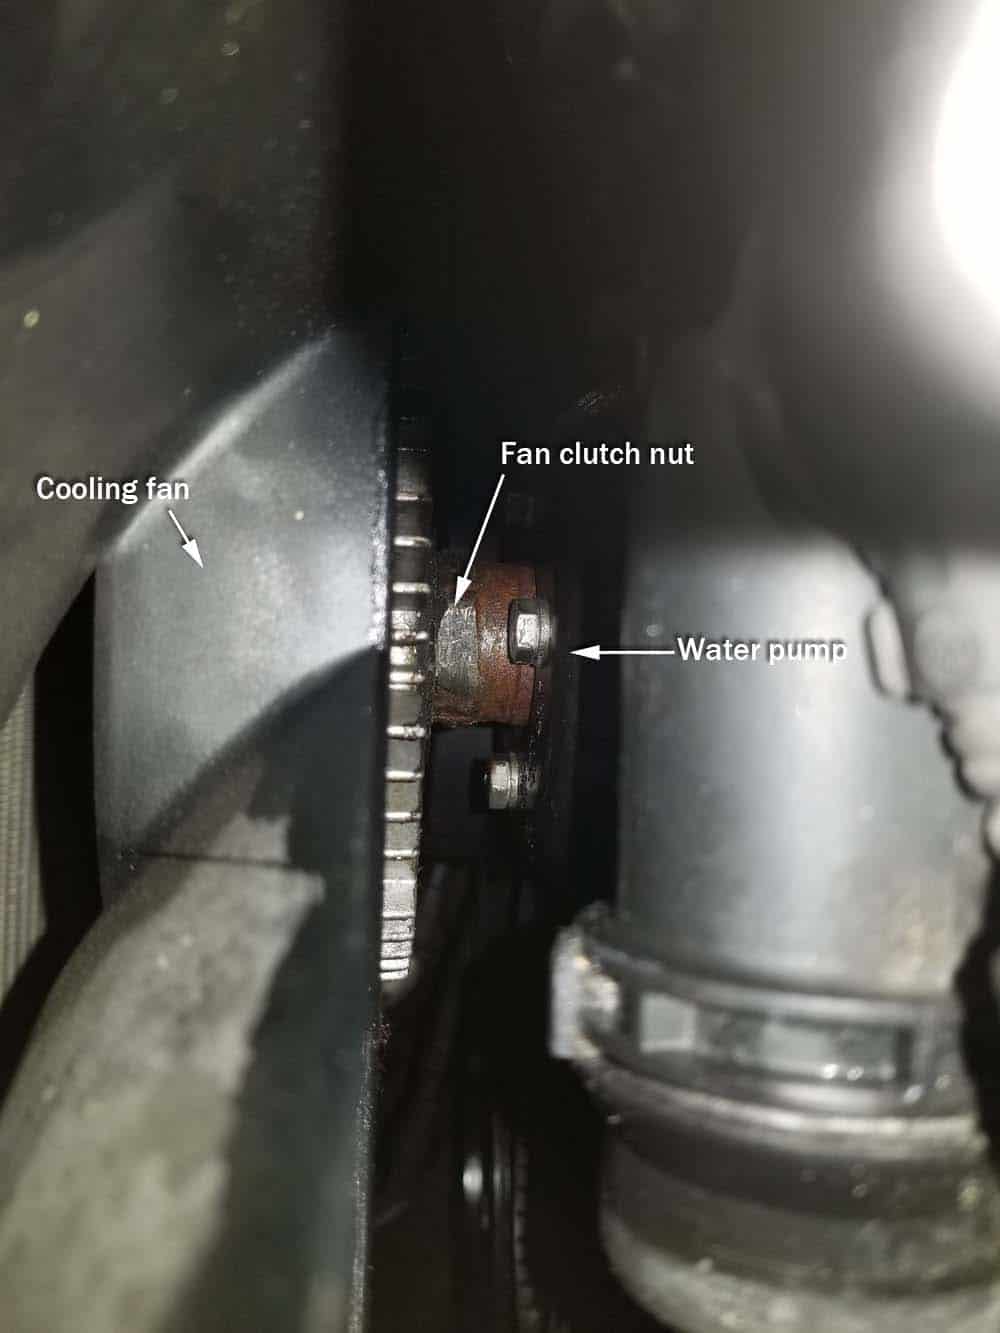 BMW E46 thermostat - locate the fan clutch nut